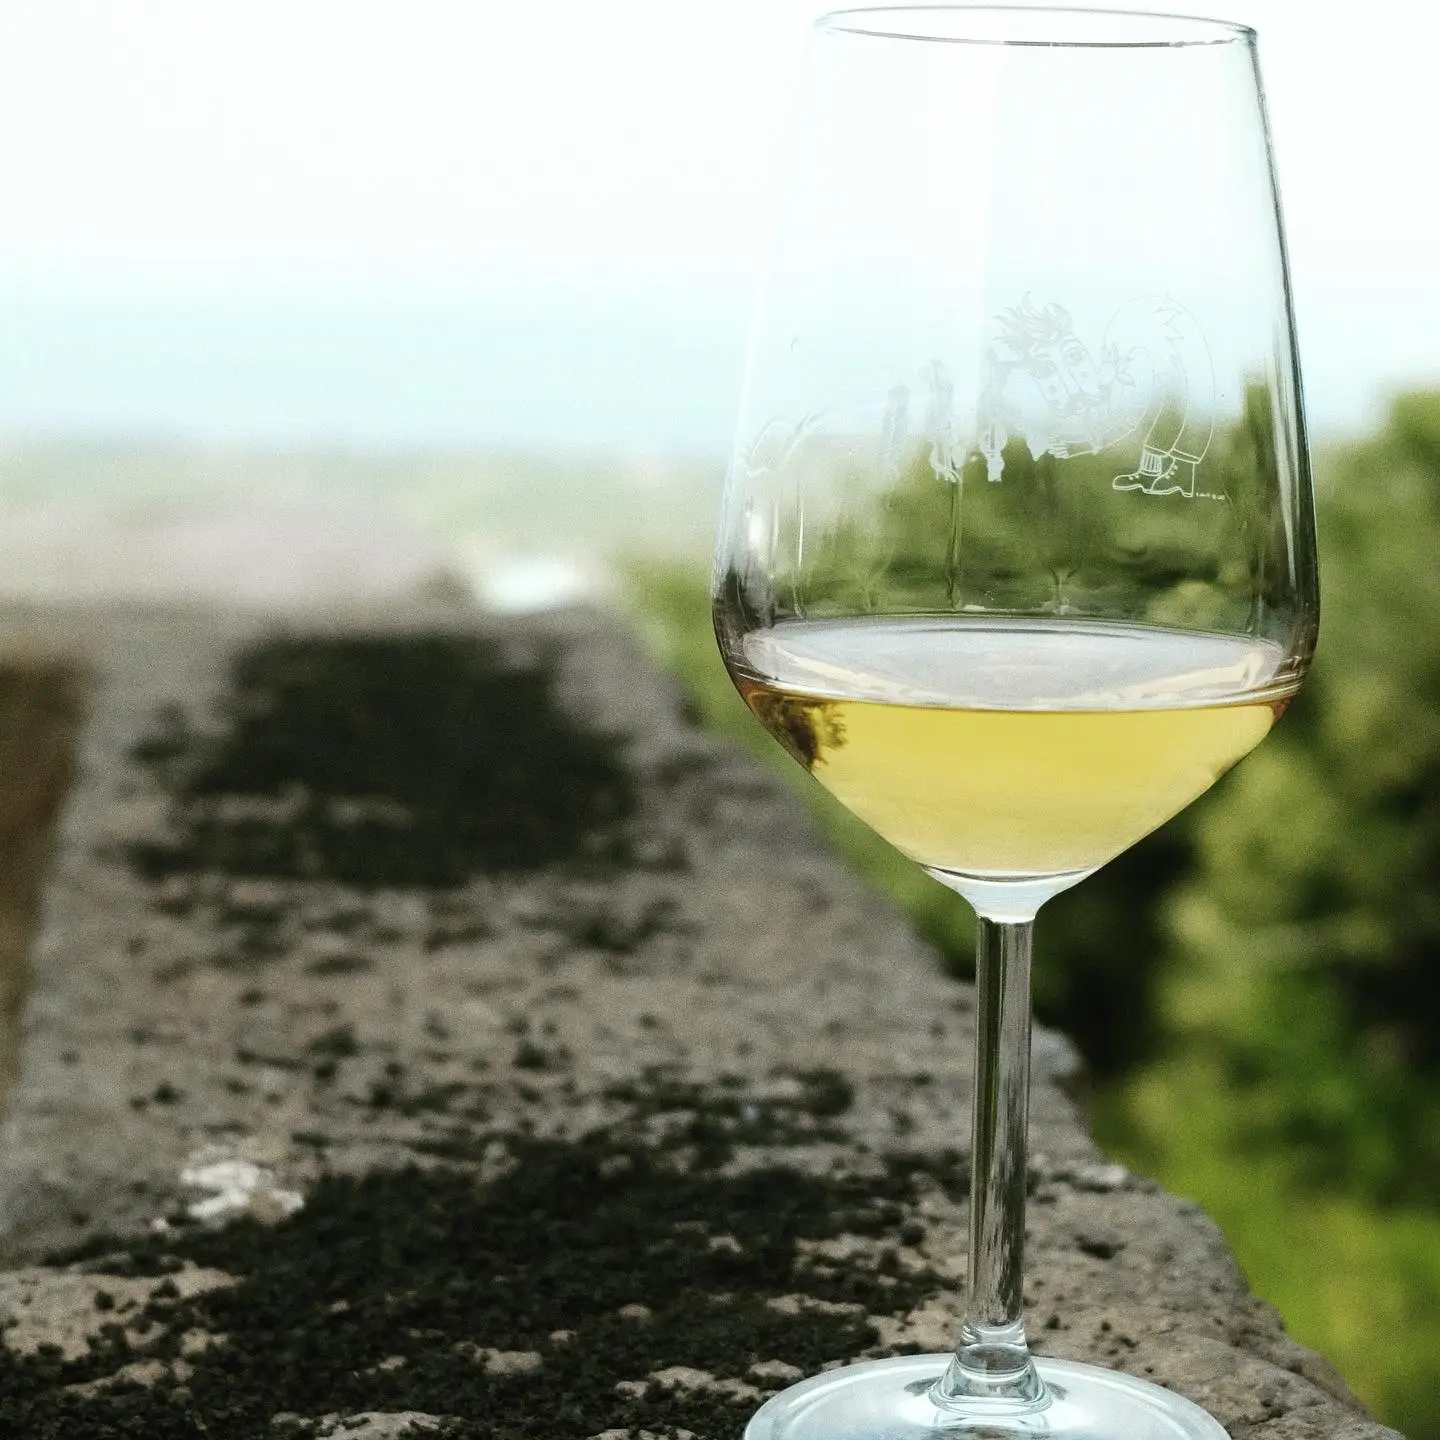 sicily wine tourism